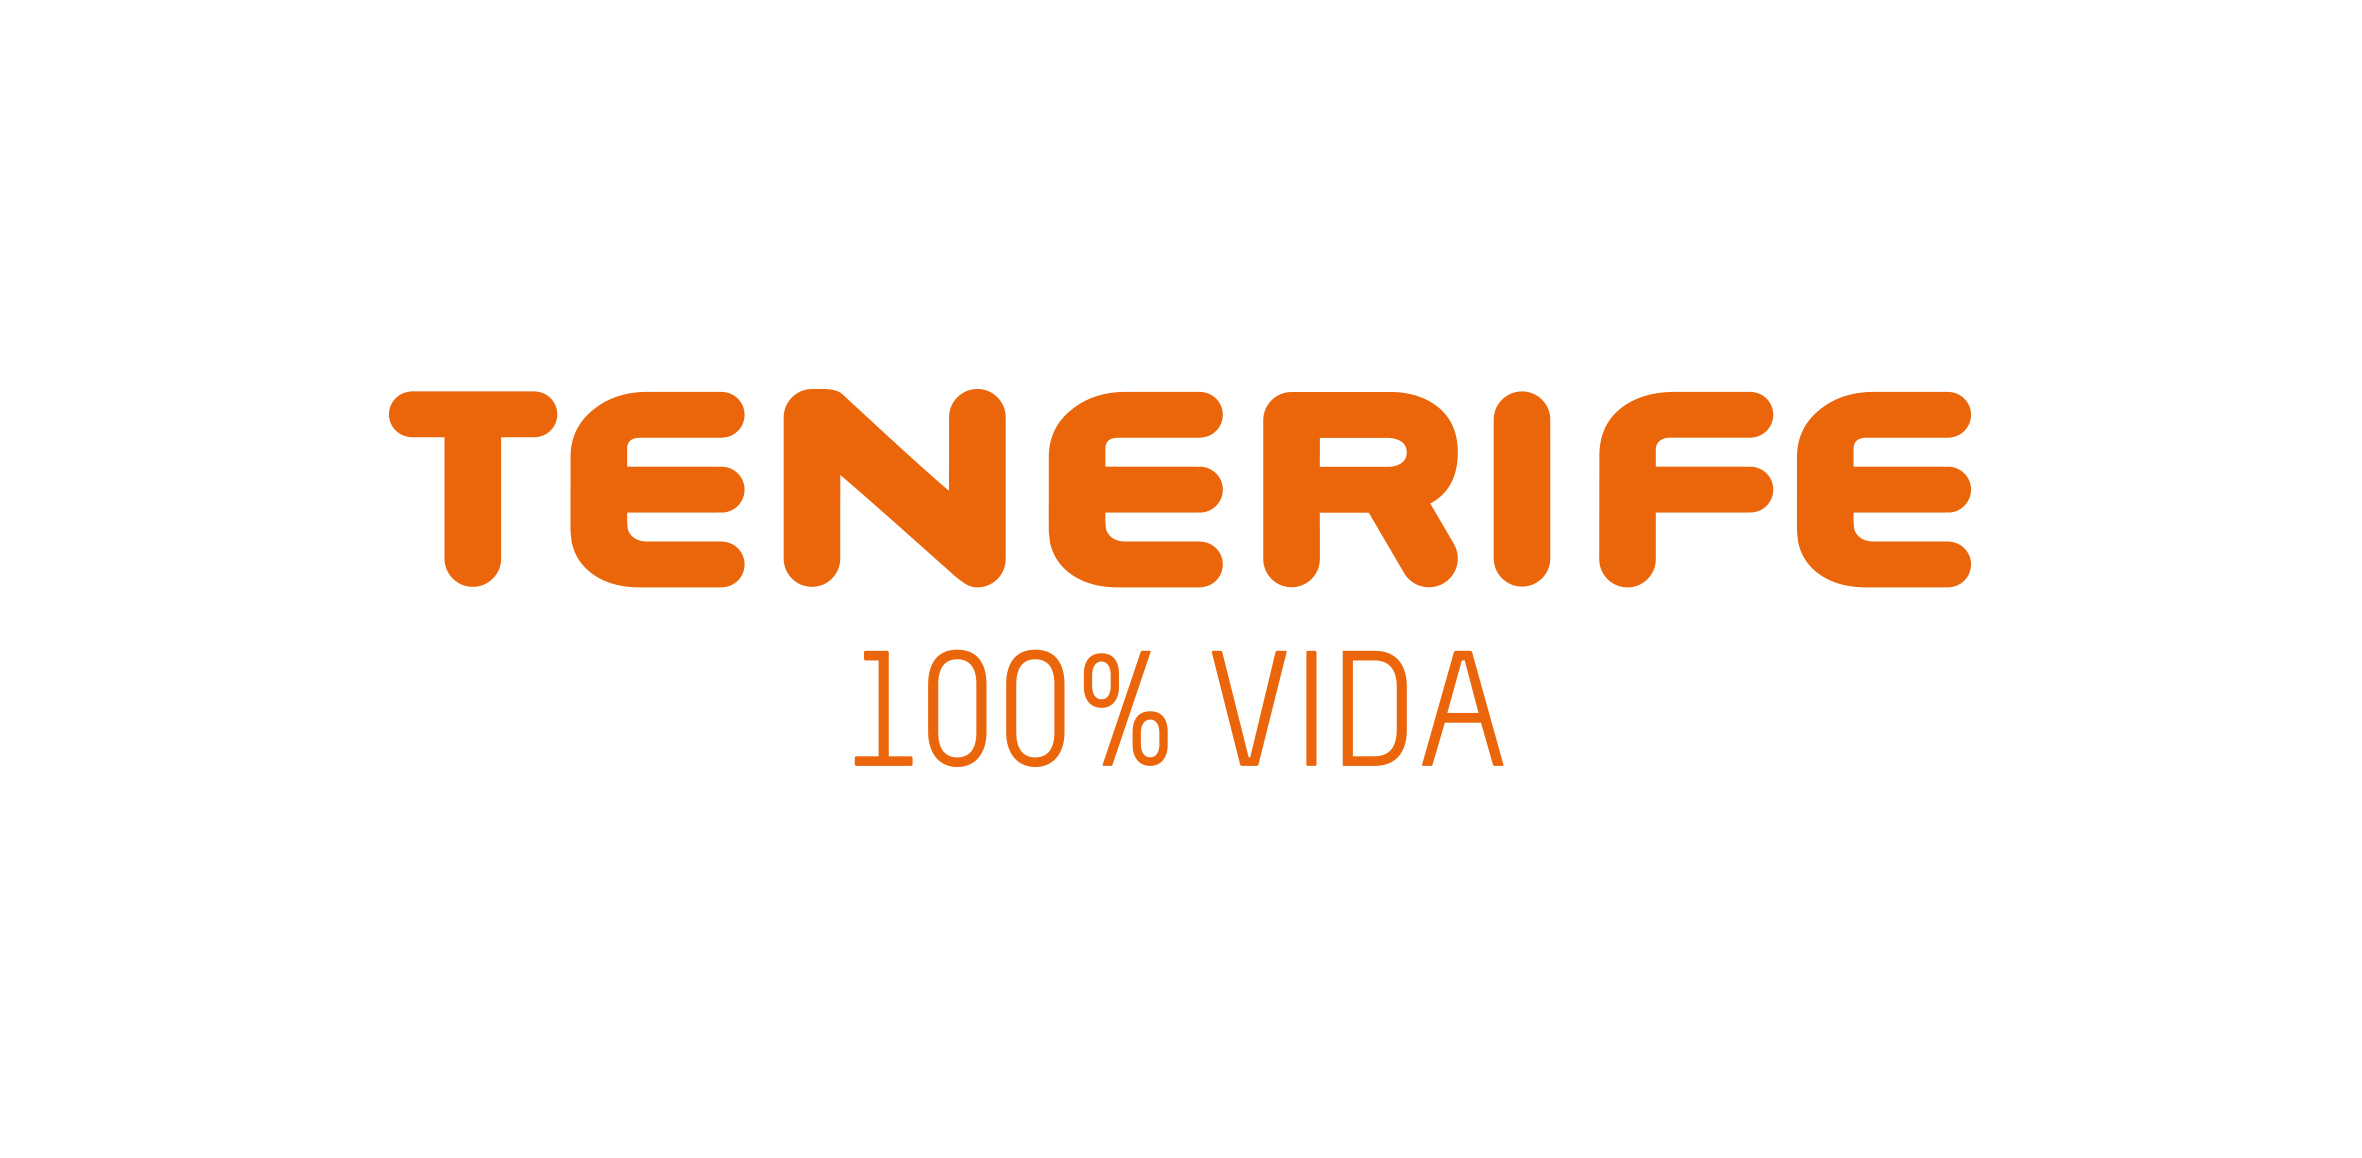 tenerife logo